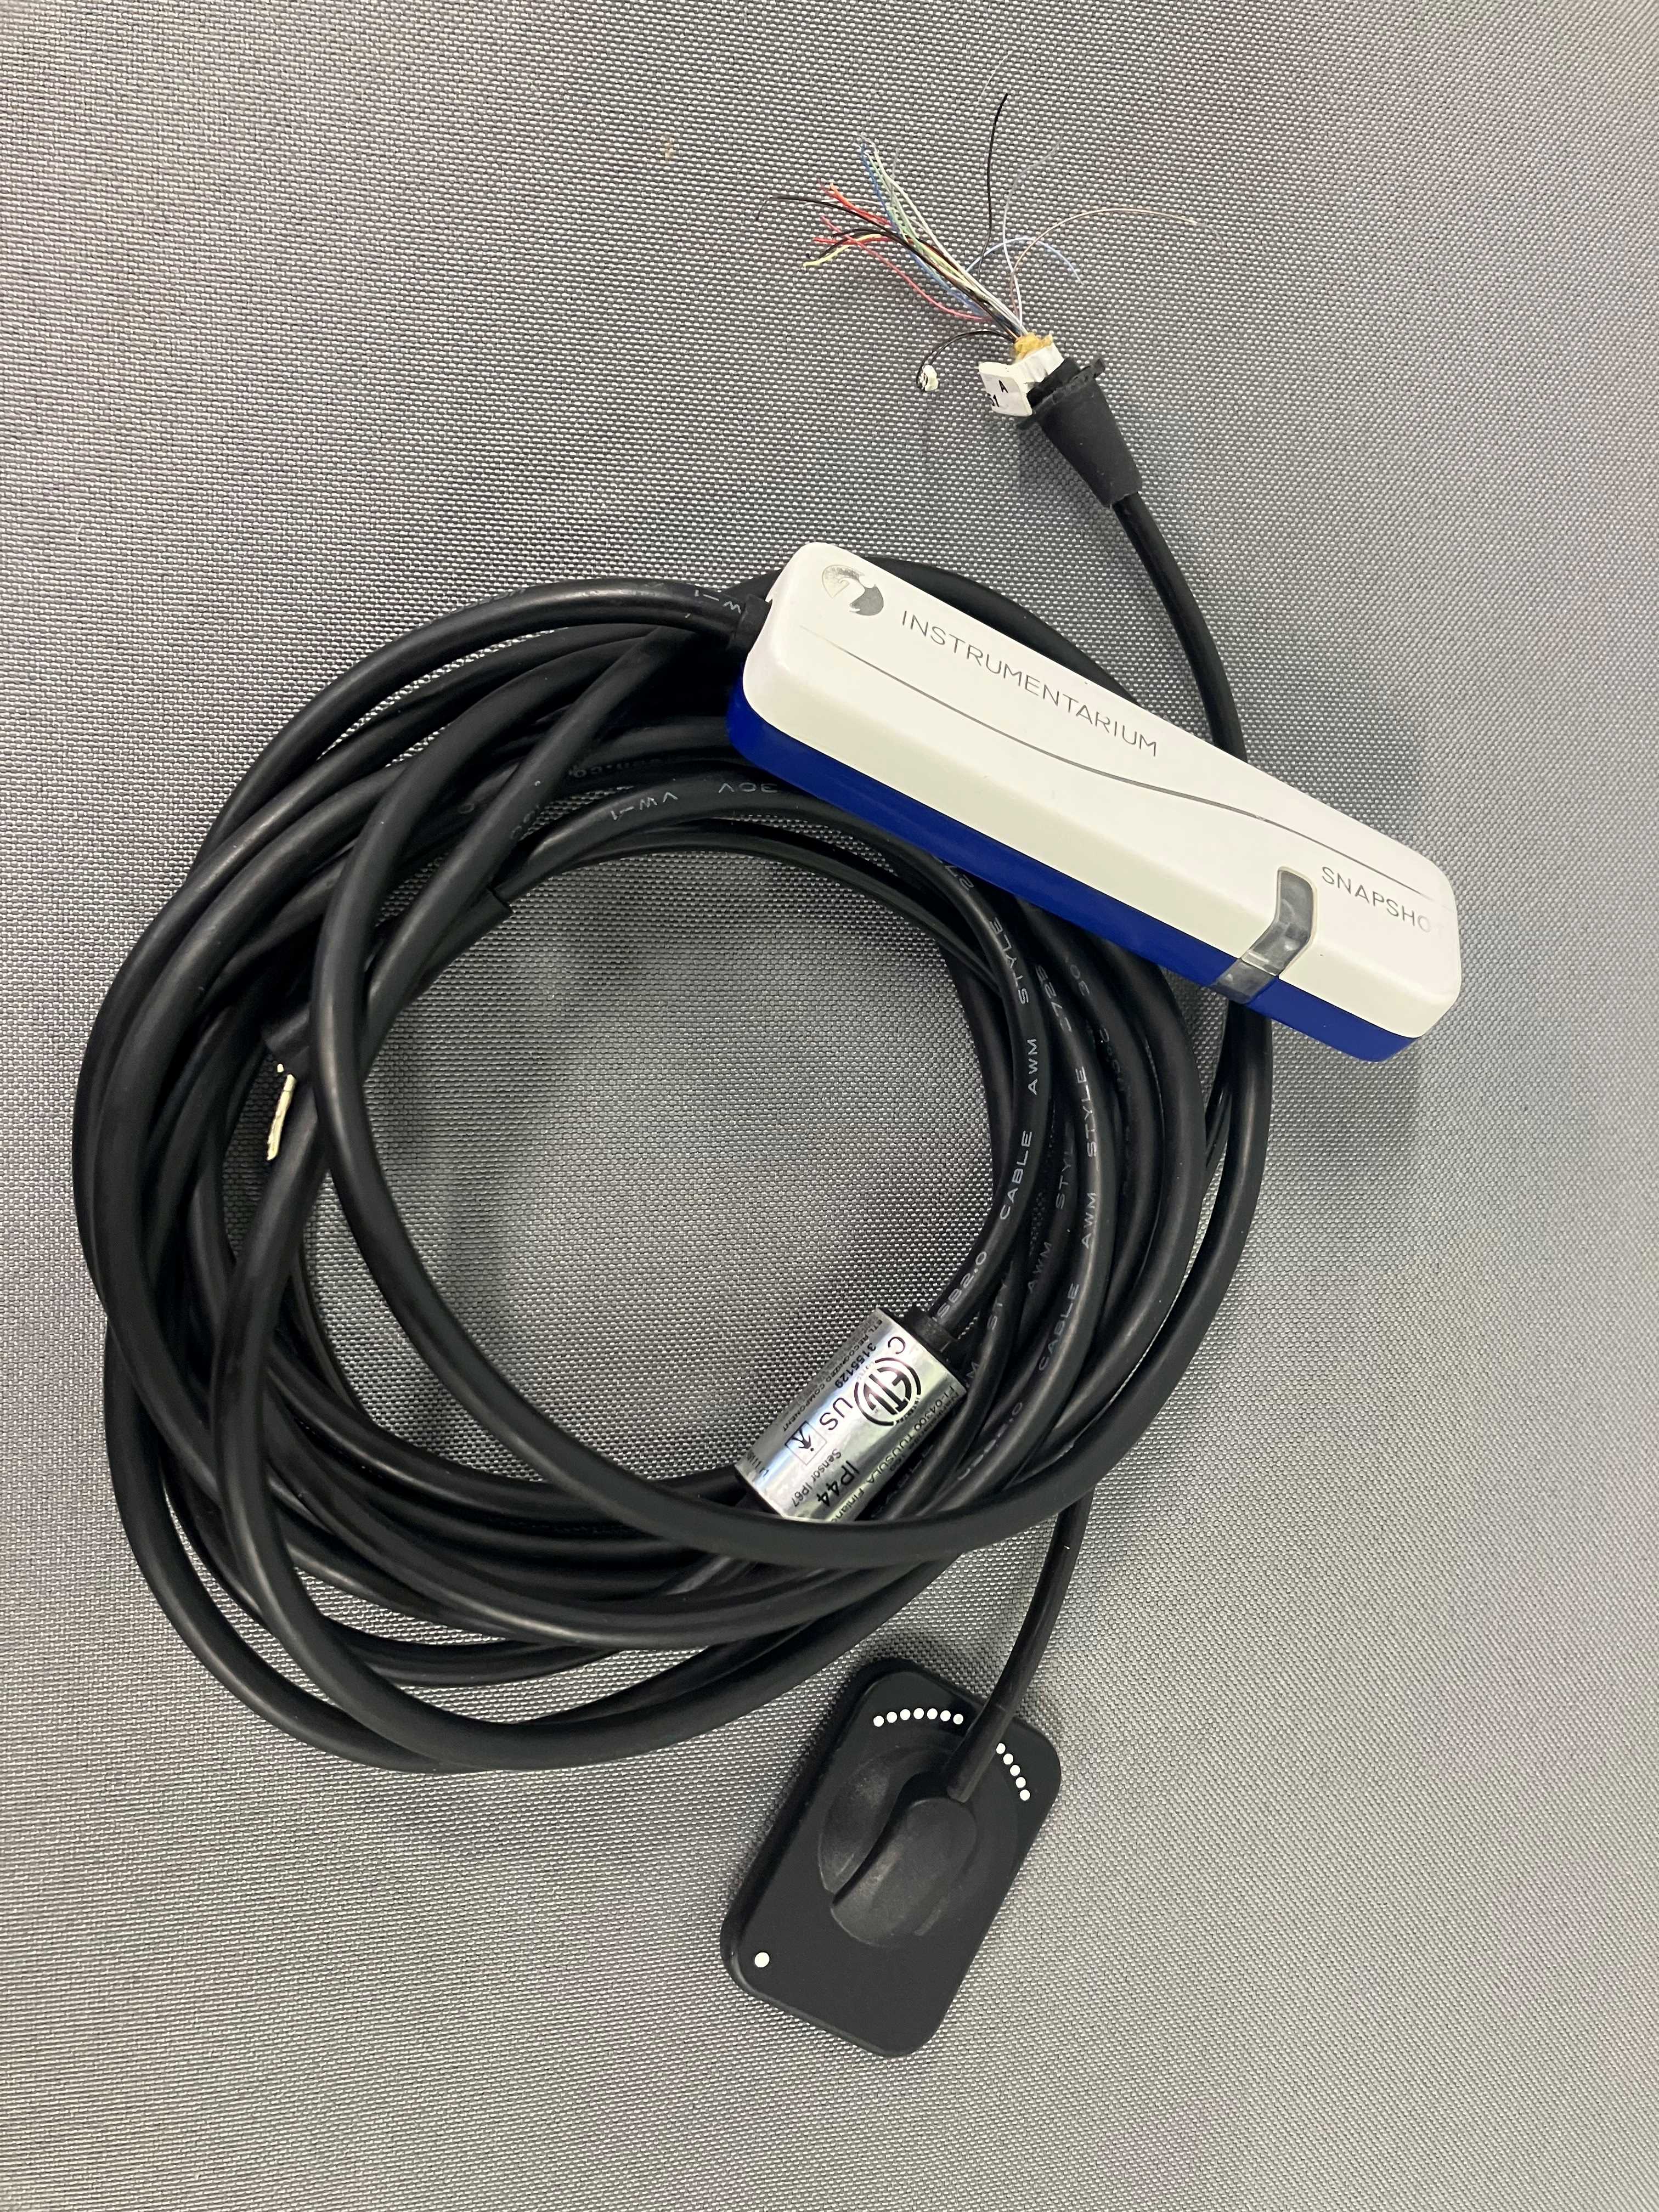 Instrumentarium Snapshot w/ HDI-S #2 Dental Sensor